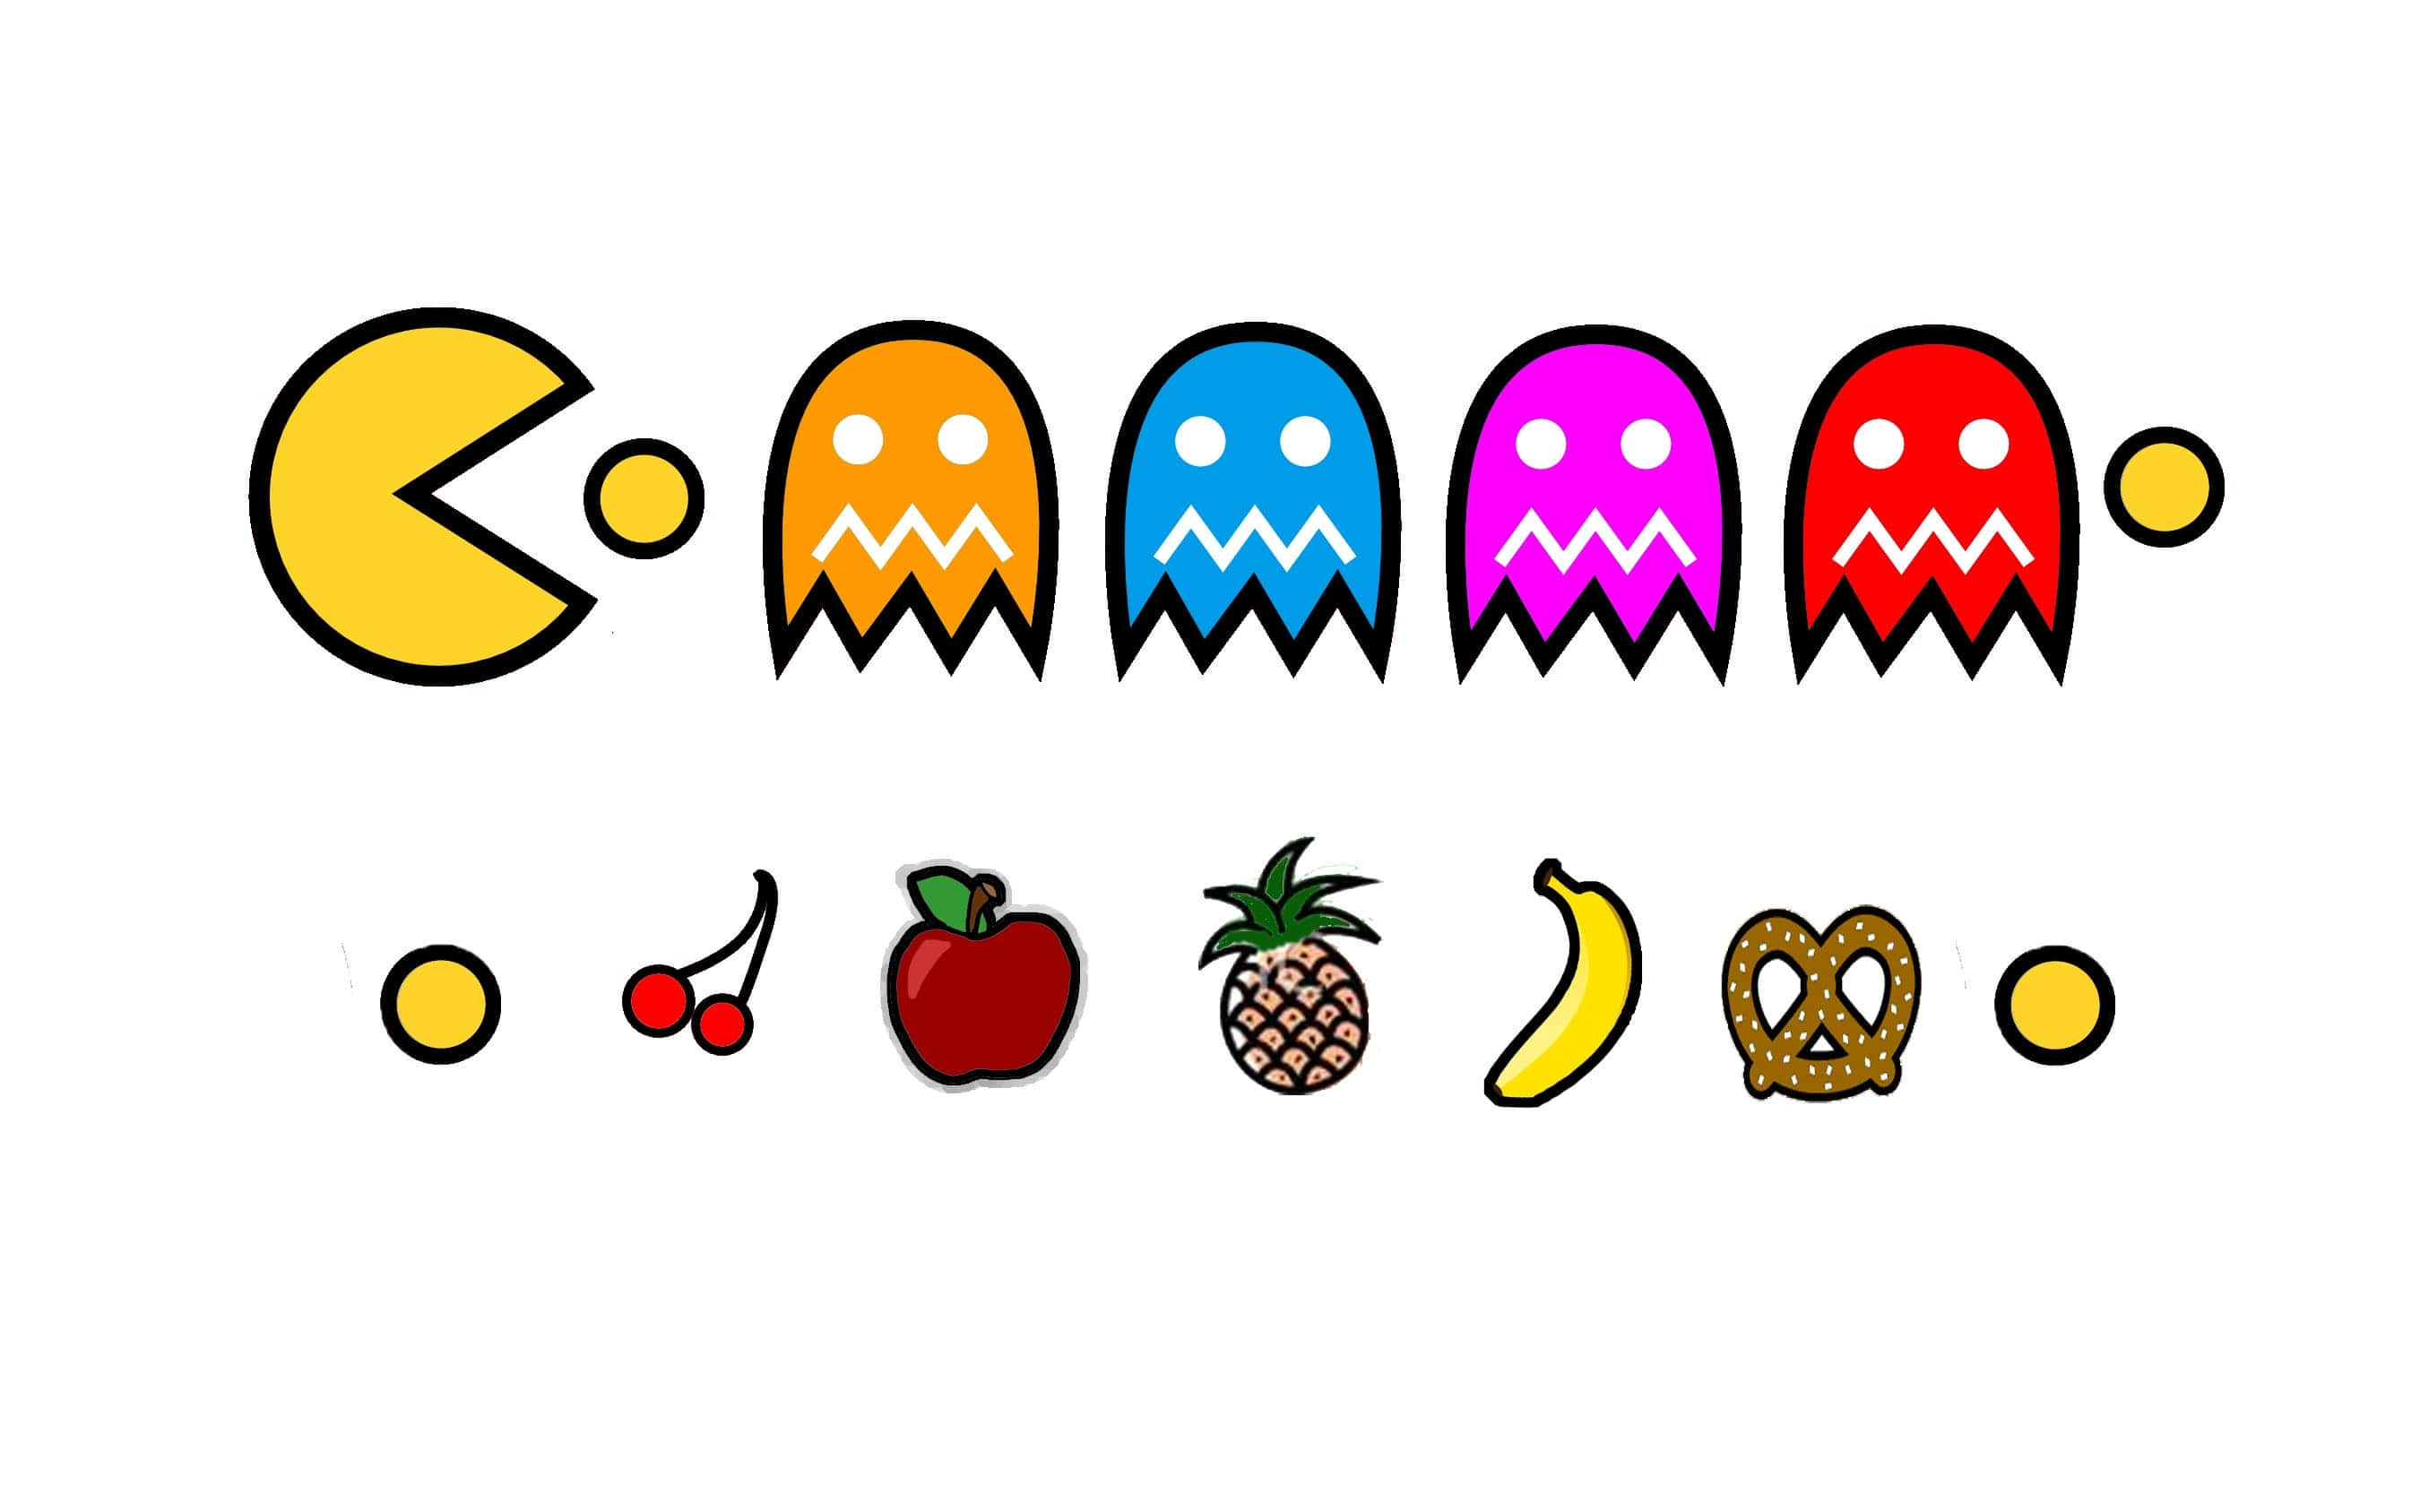 Pac-Man Nostalgia: The Classic Arcade Game Comes Alive